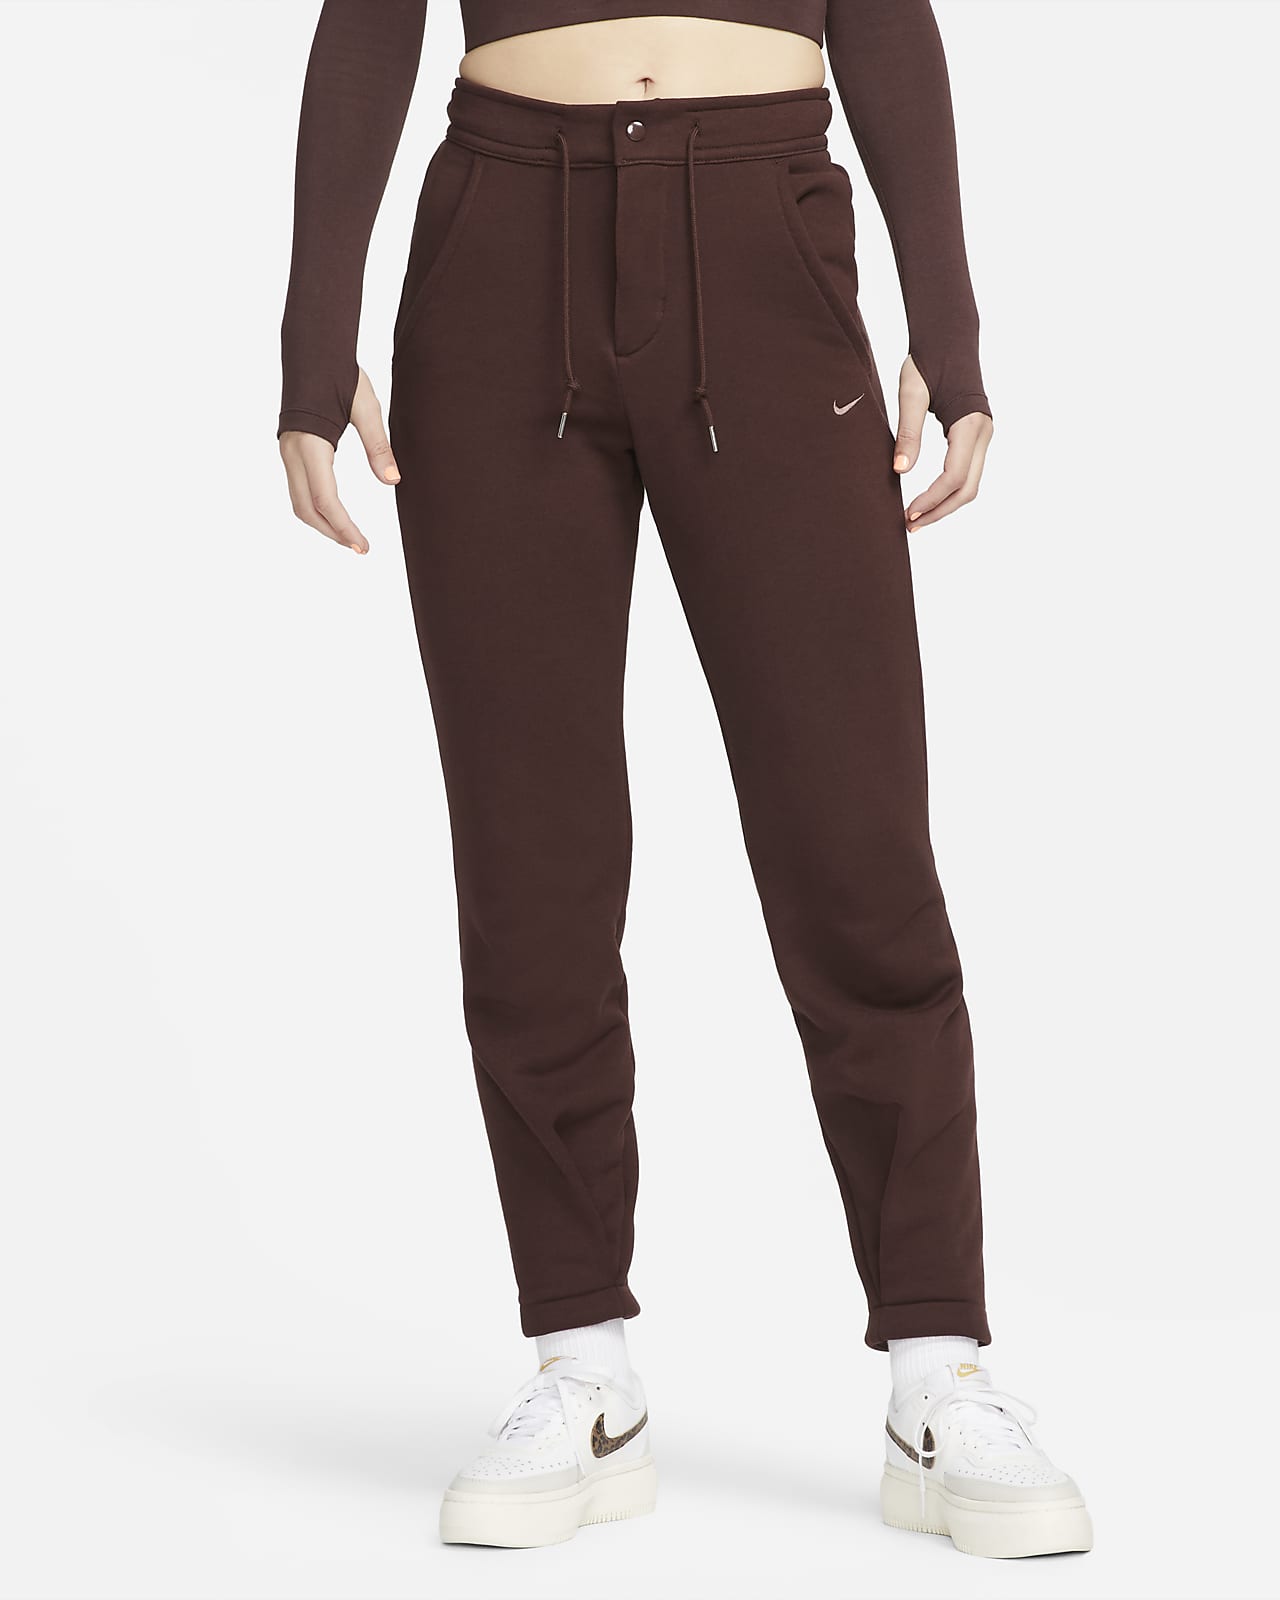 kandidatskole Mundtlig vækstdvale Nike Sportswear Modern Fleece-bukser i french terry med høj talje til  kvinder. Nike DK